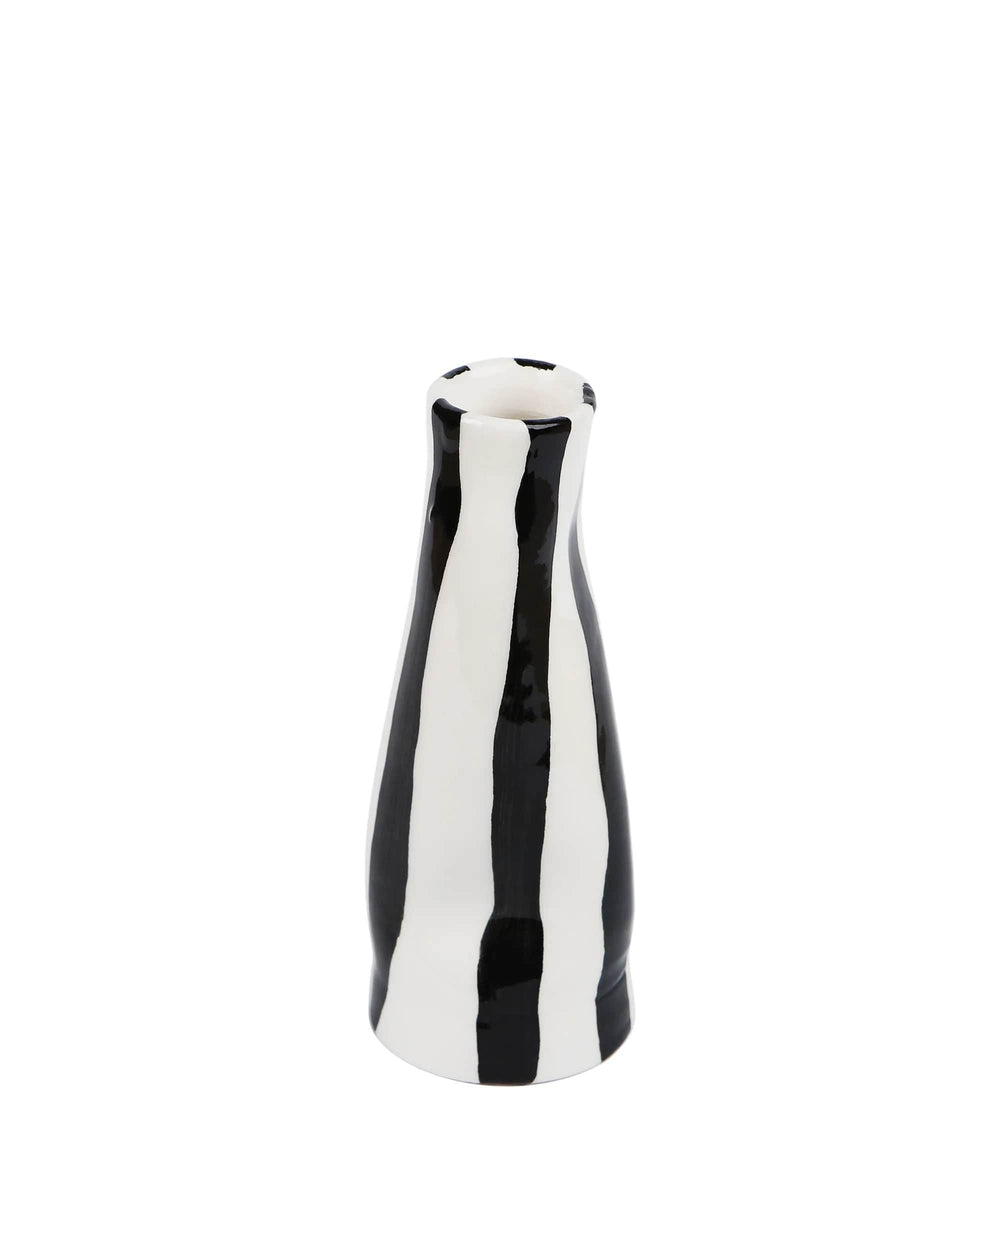 Black And White Striped Vase